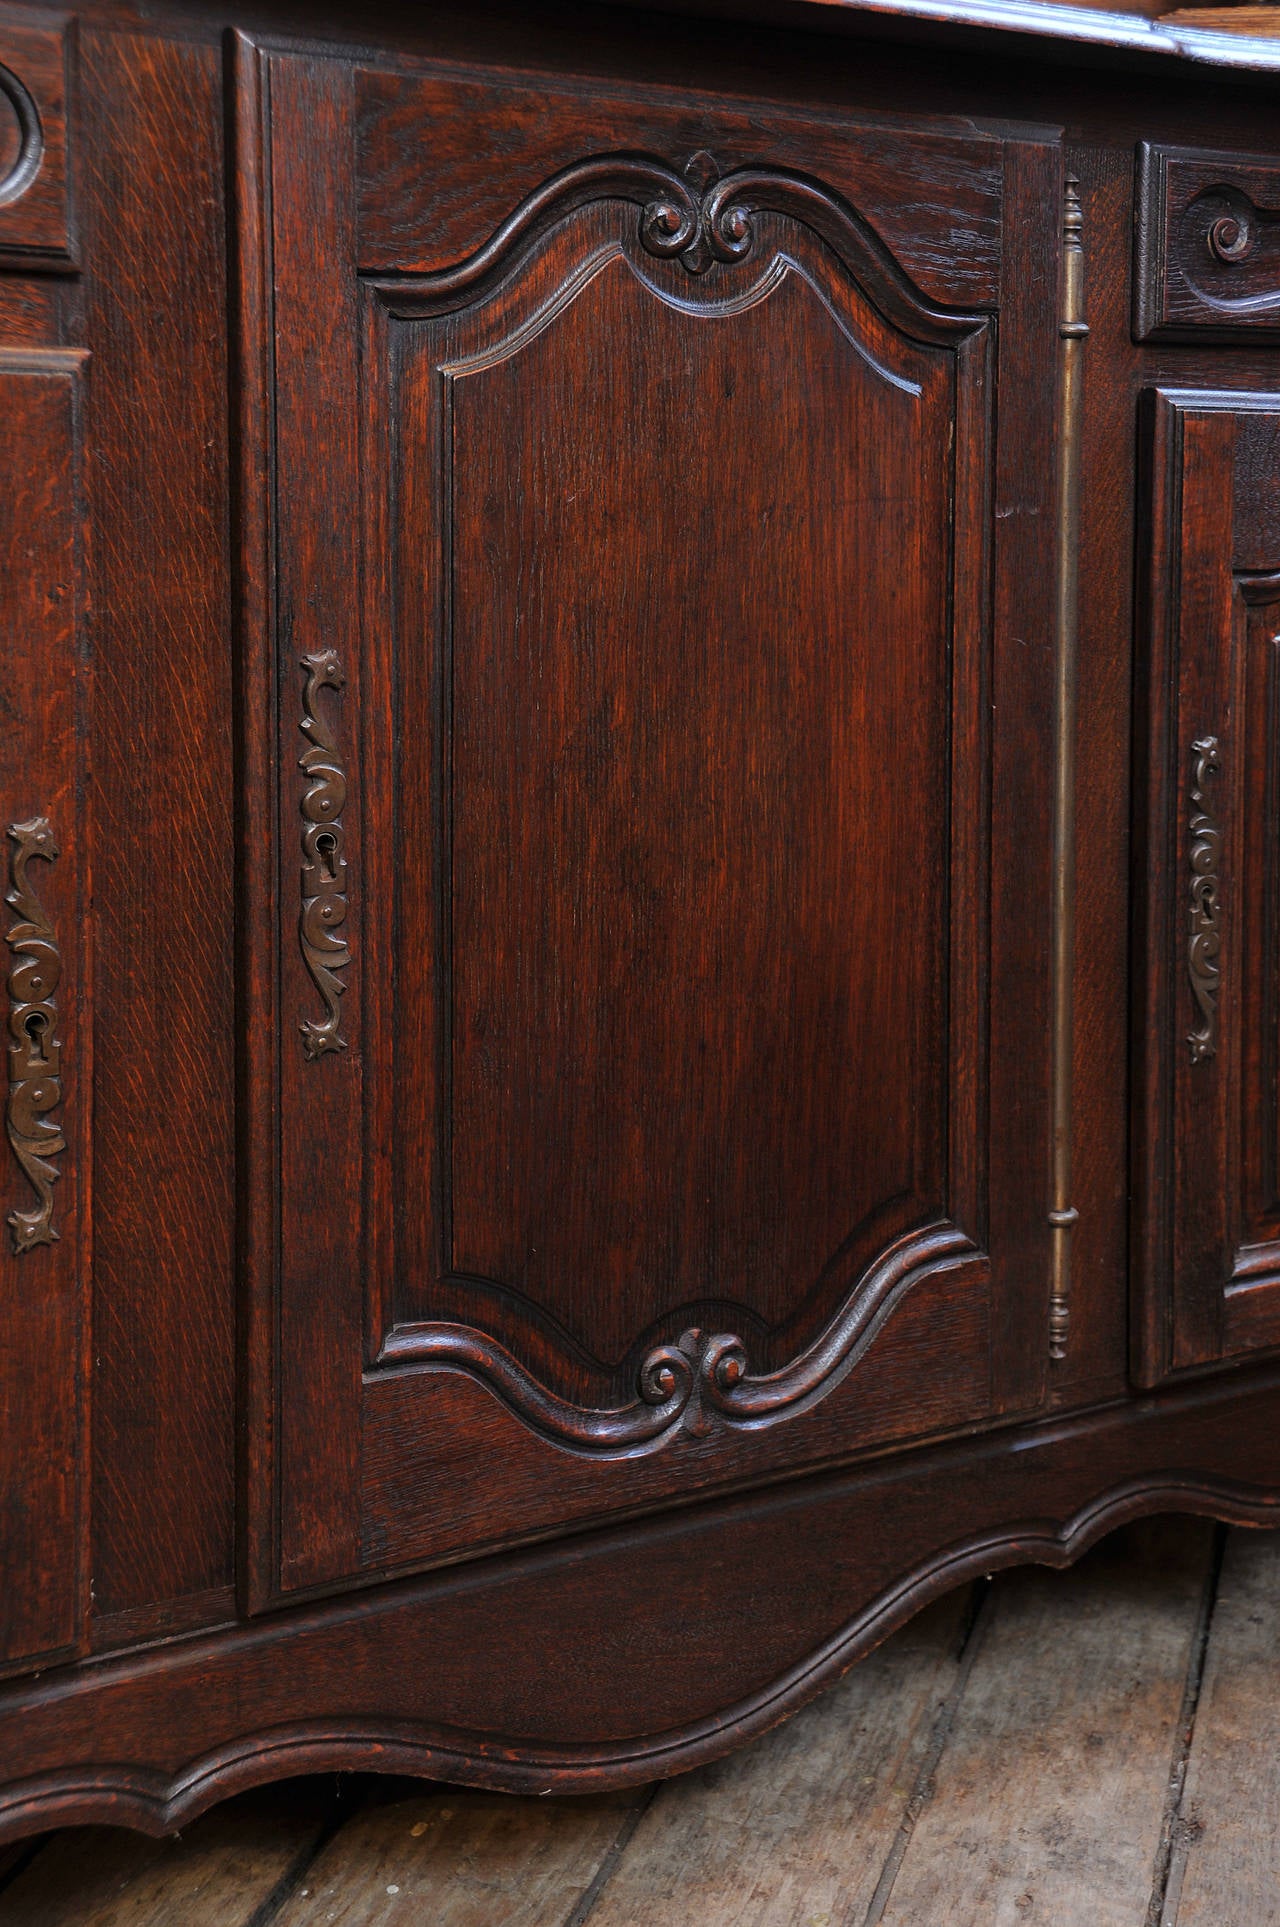 3 large raised paneled doors. 

2 silverware drawers.

Raised paneled sides. 

Carved top.